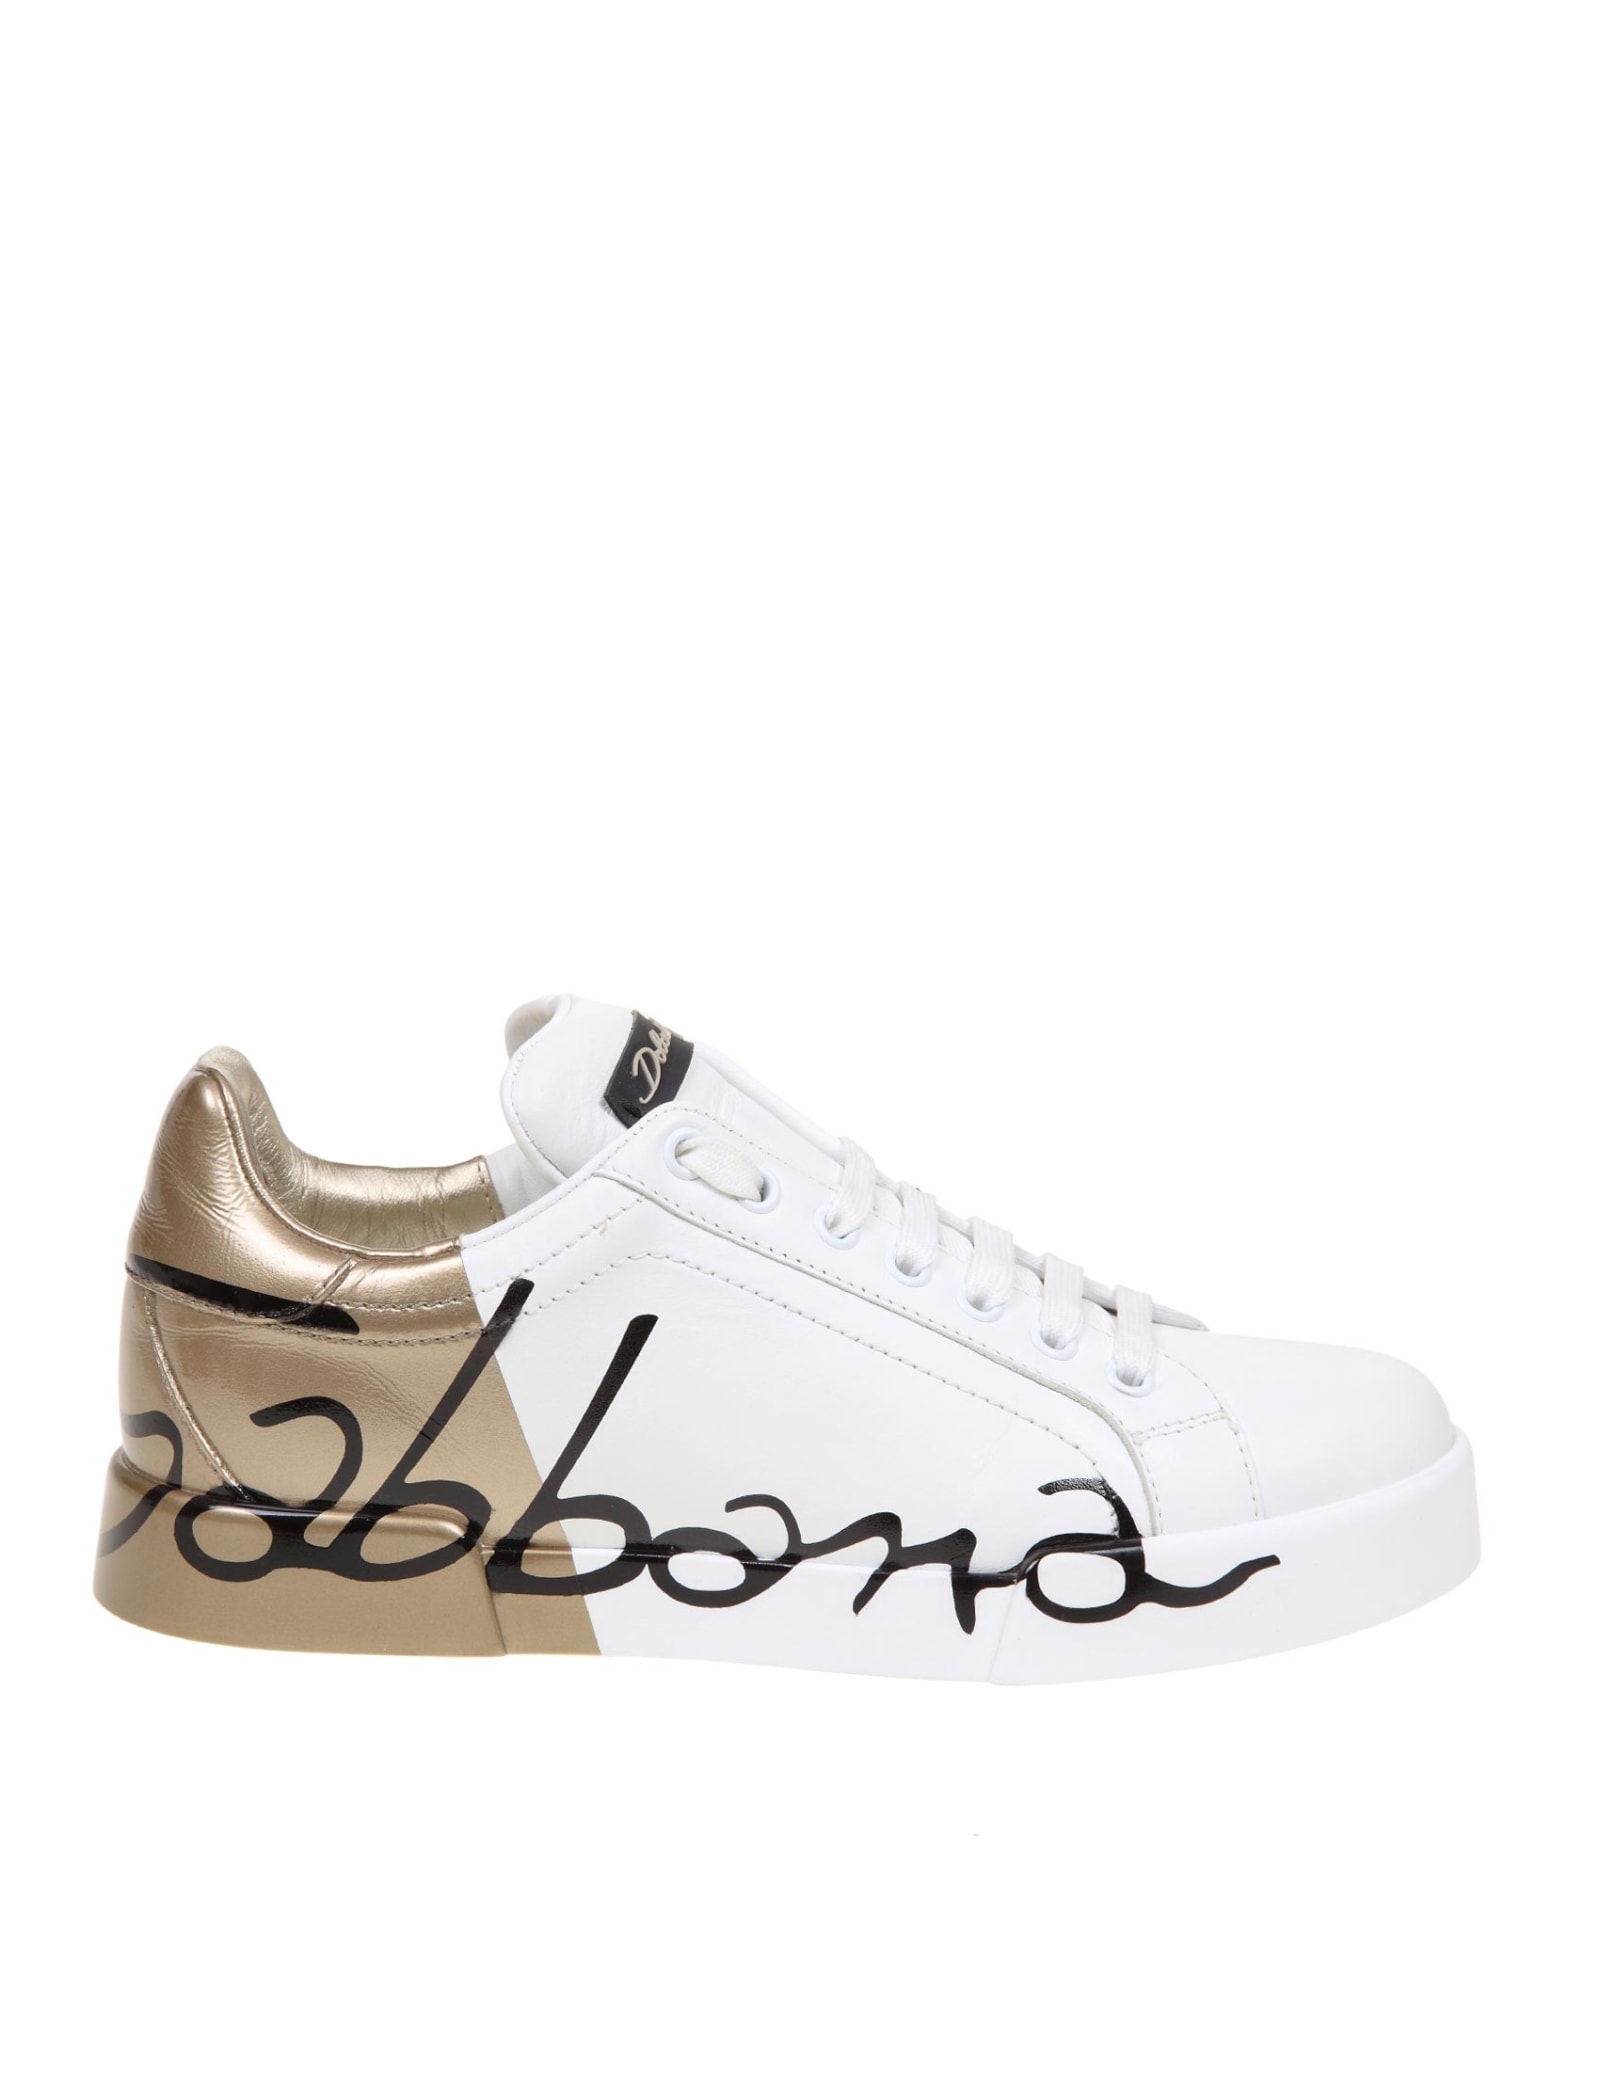 Dolce & Gabbana Portofino Sneakers In White And Gold Leather